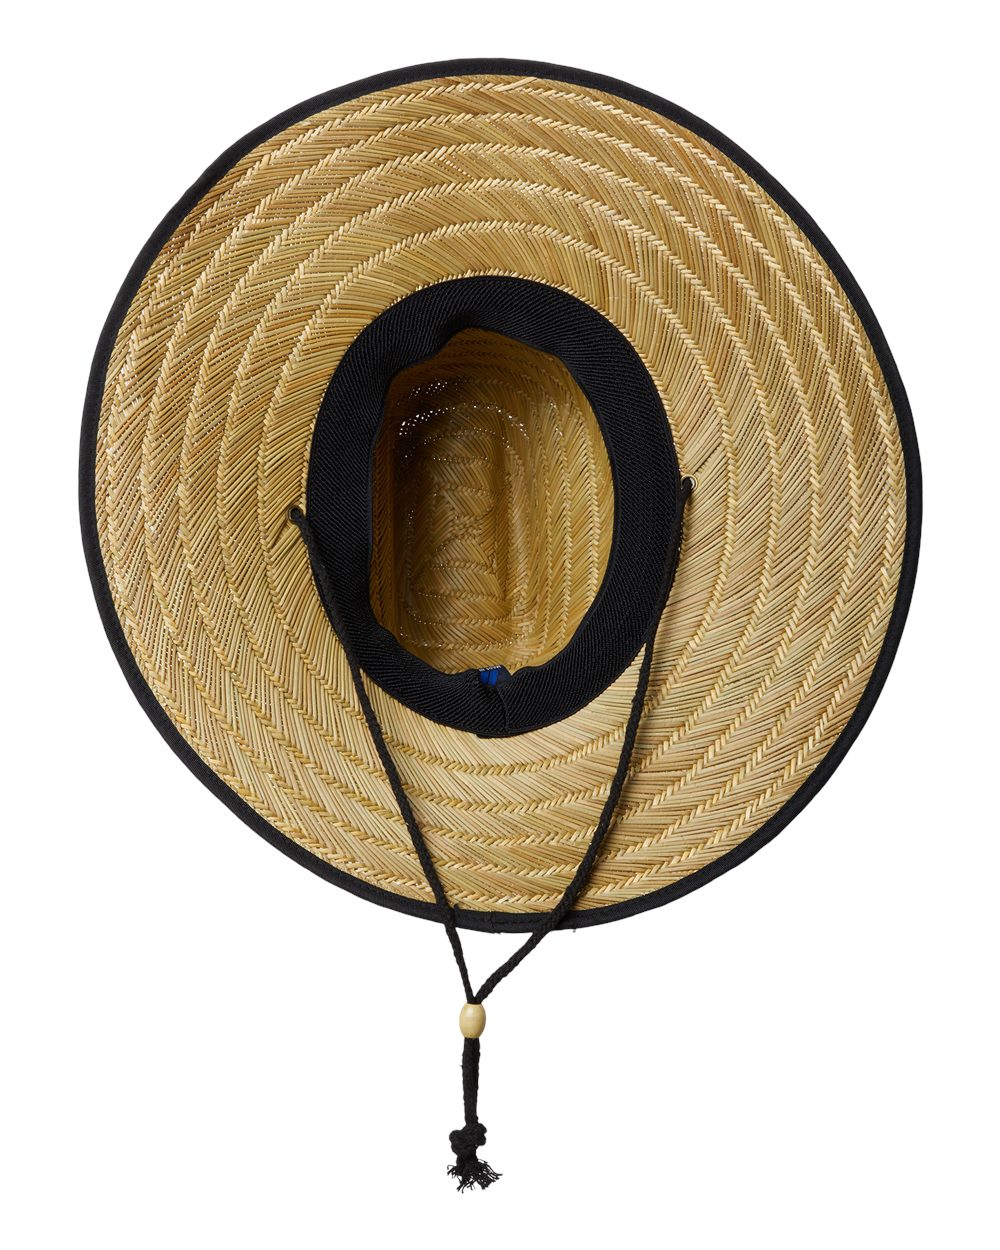 Summertime Straw Hat